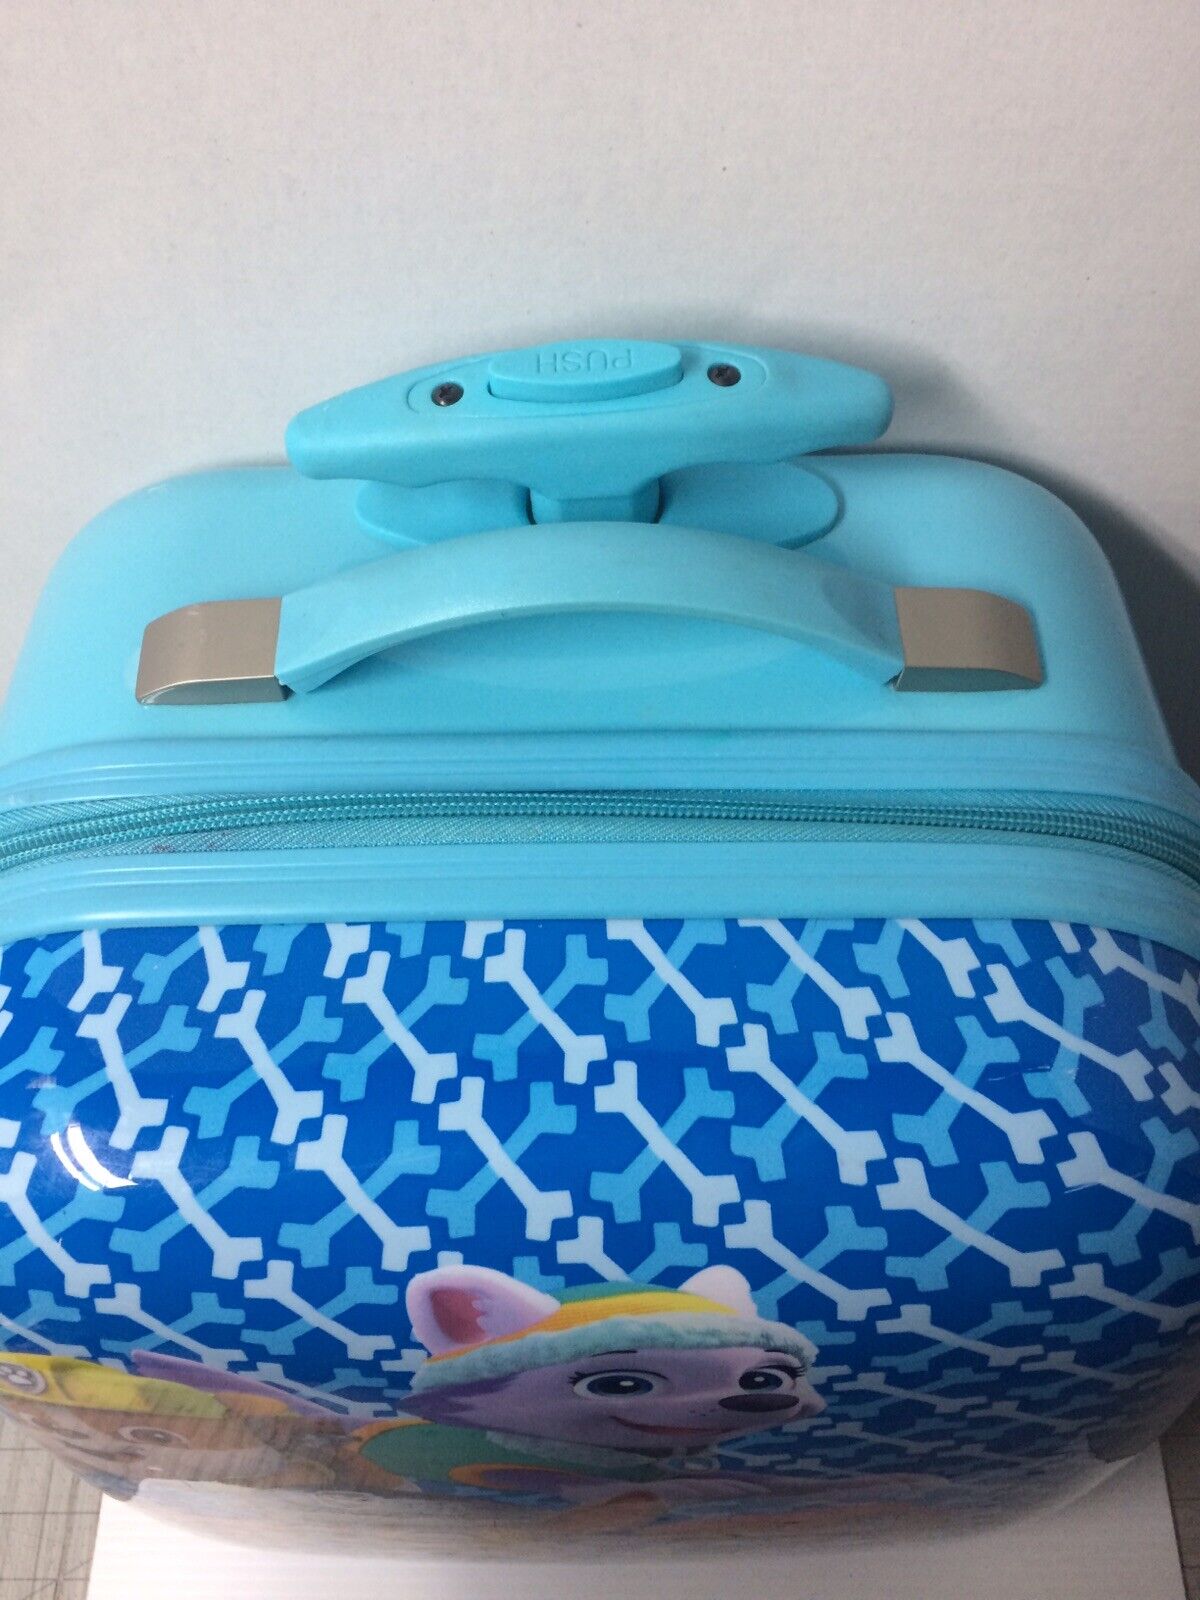 Paw Patrol 17” Inch Rolling Suitcase Luggage Nickelodeon Heys Boys Girls